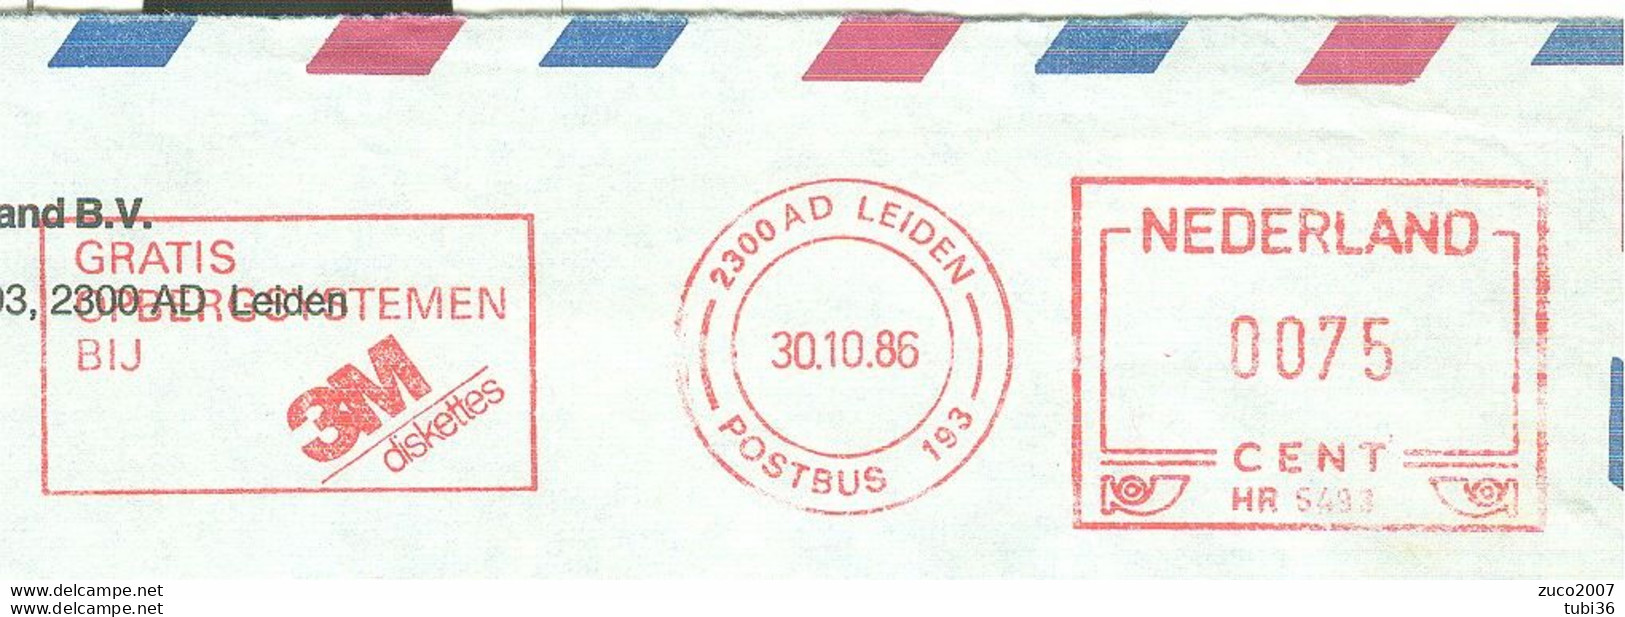 NEDERLAND - LEIDEN - 3M -1986 - FERRARA - ITALIA - Macchine Per Obliterare (EMA)